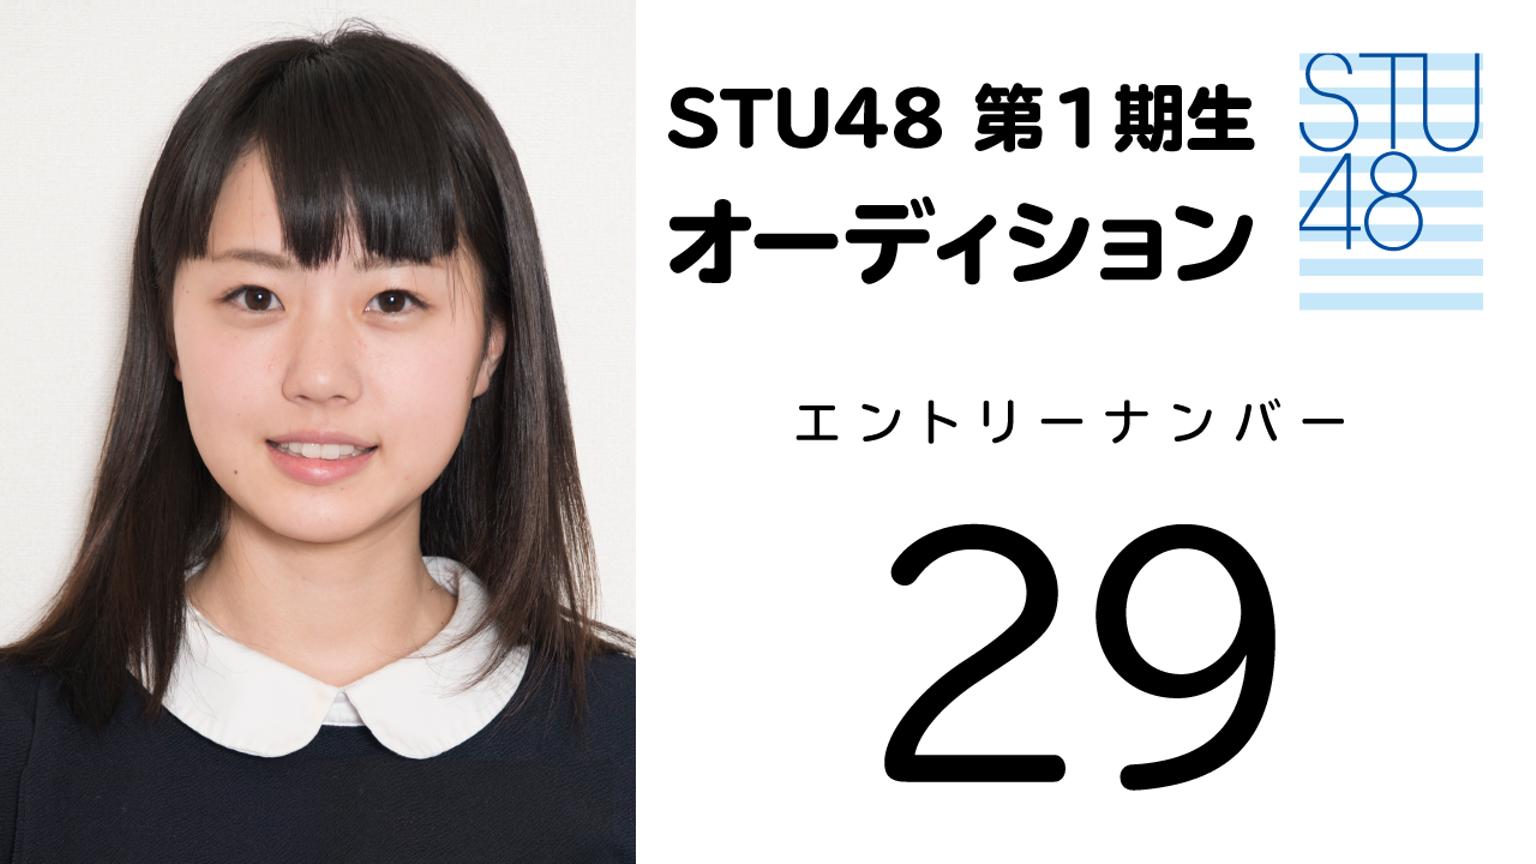 STU48 第1期受験生 エントリーナンバー29番